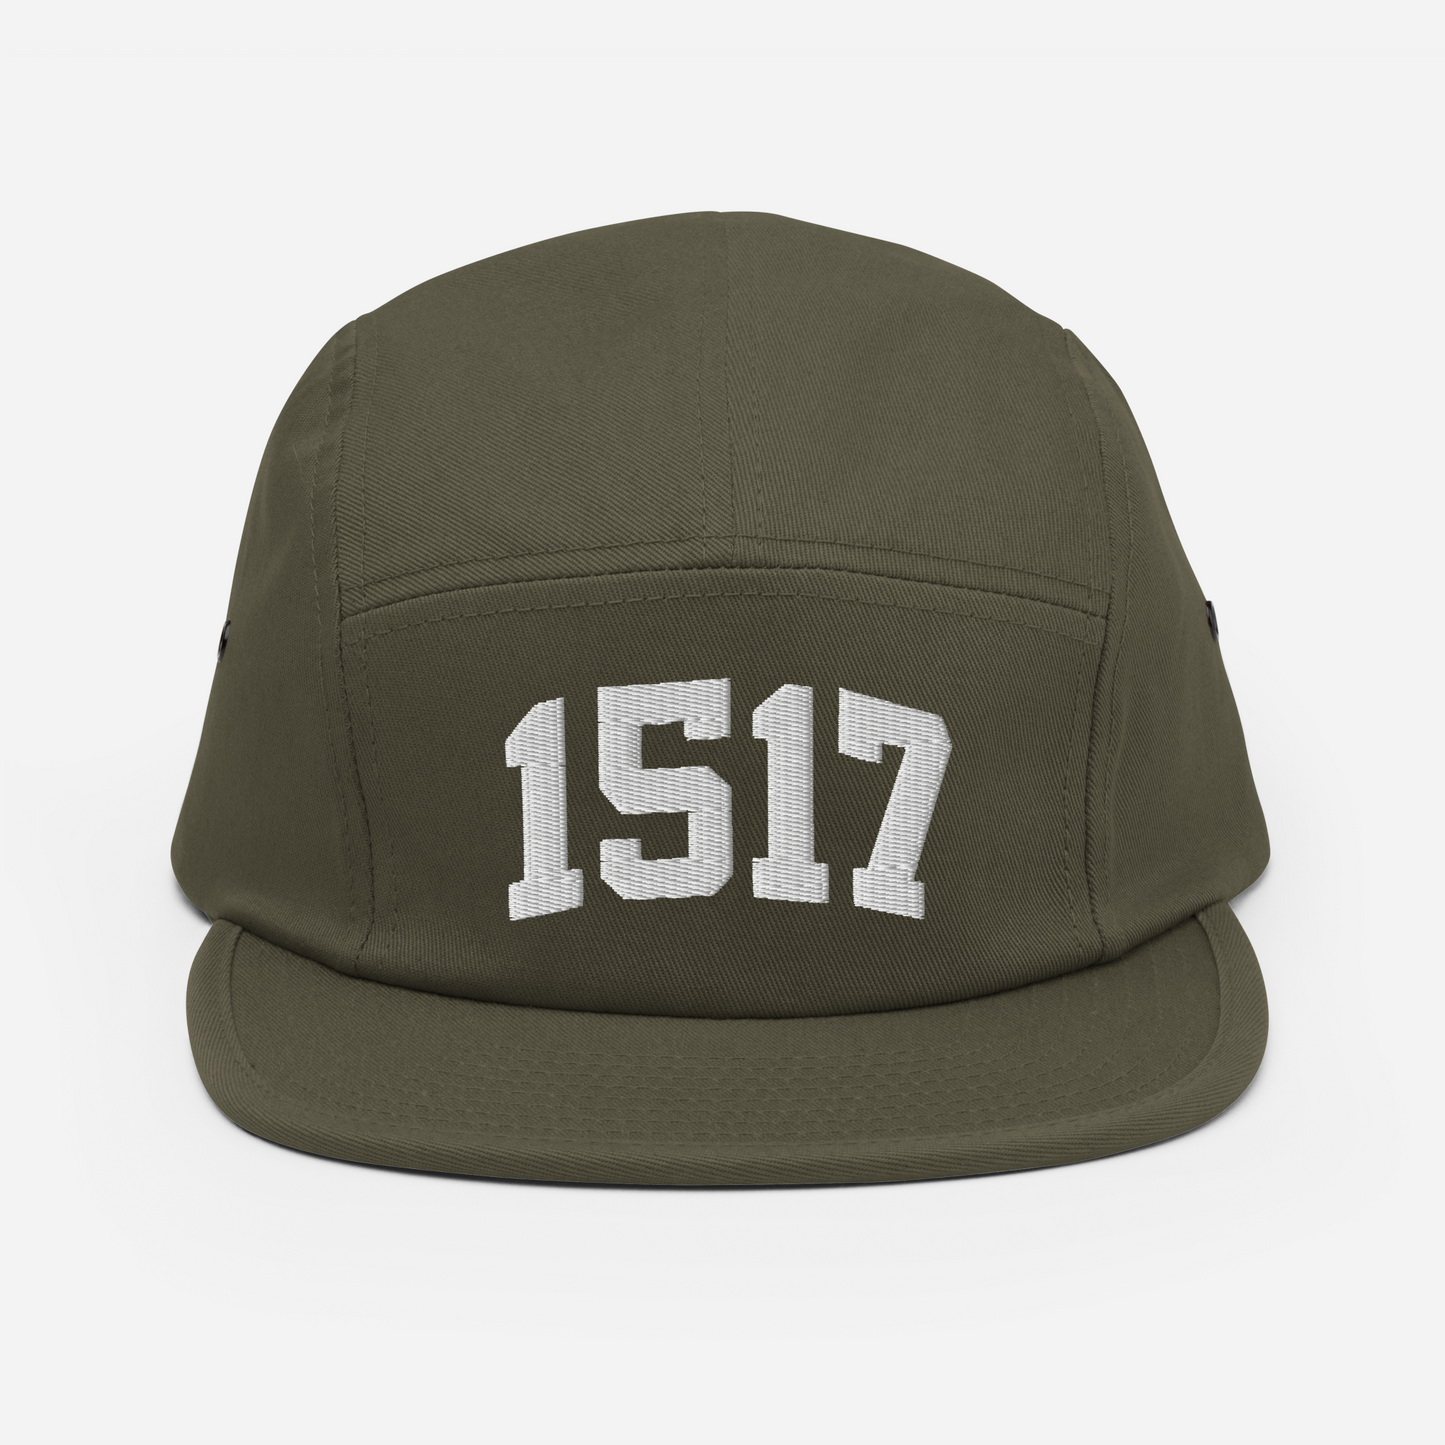 1517 Camper Hat